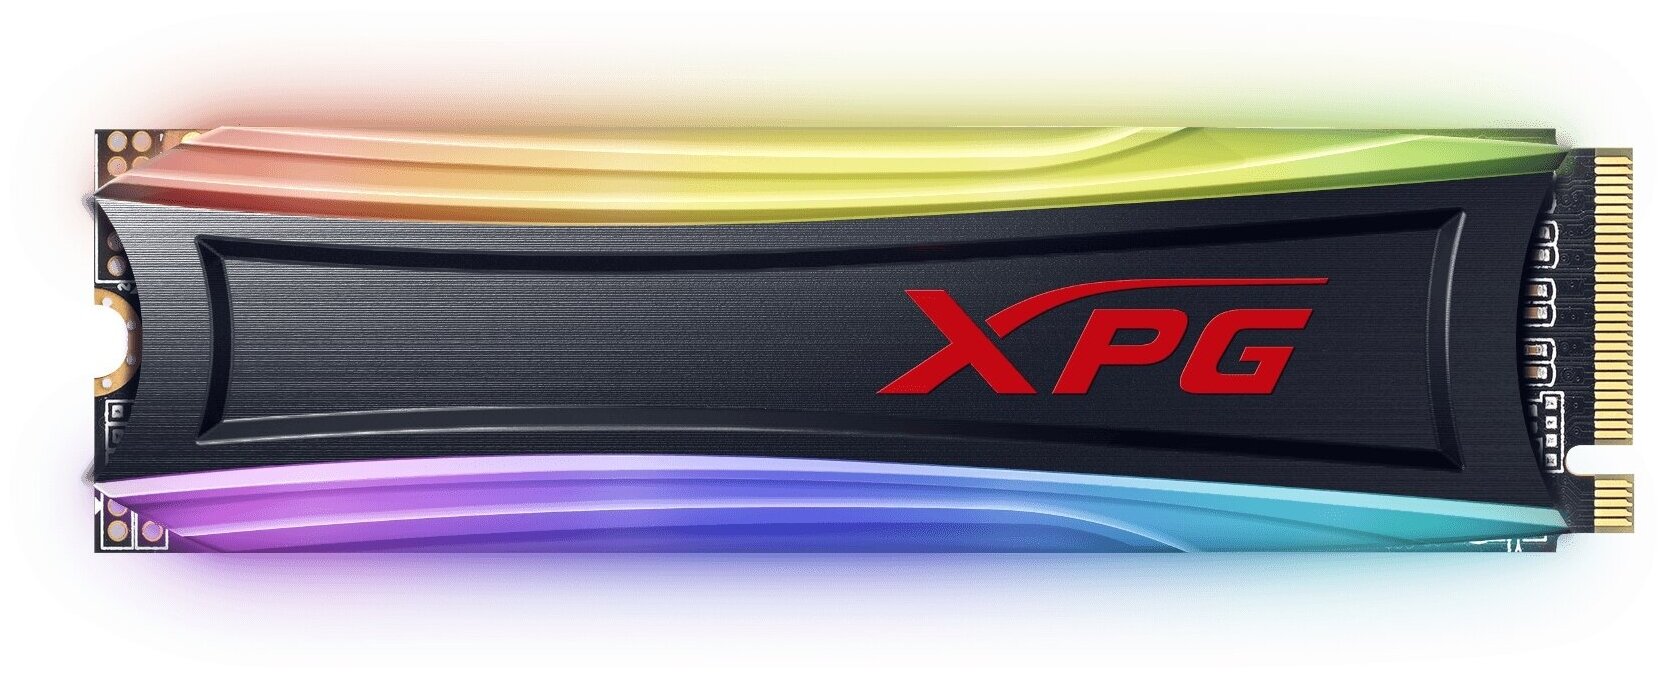 Накопитель SSD M.2 Adata XPG Spectrix S40g RGB 512 Gb PCIe 3.0 x4 (NVMe) 3D TLC (as40g-512gt-c) As40